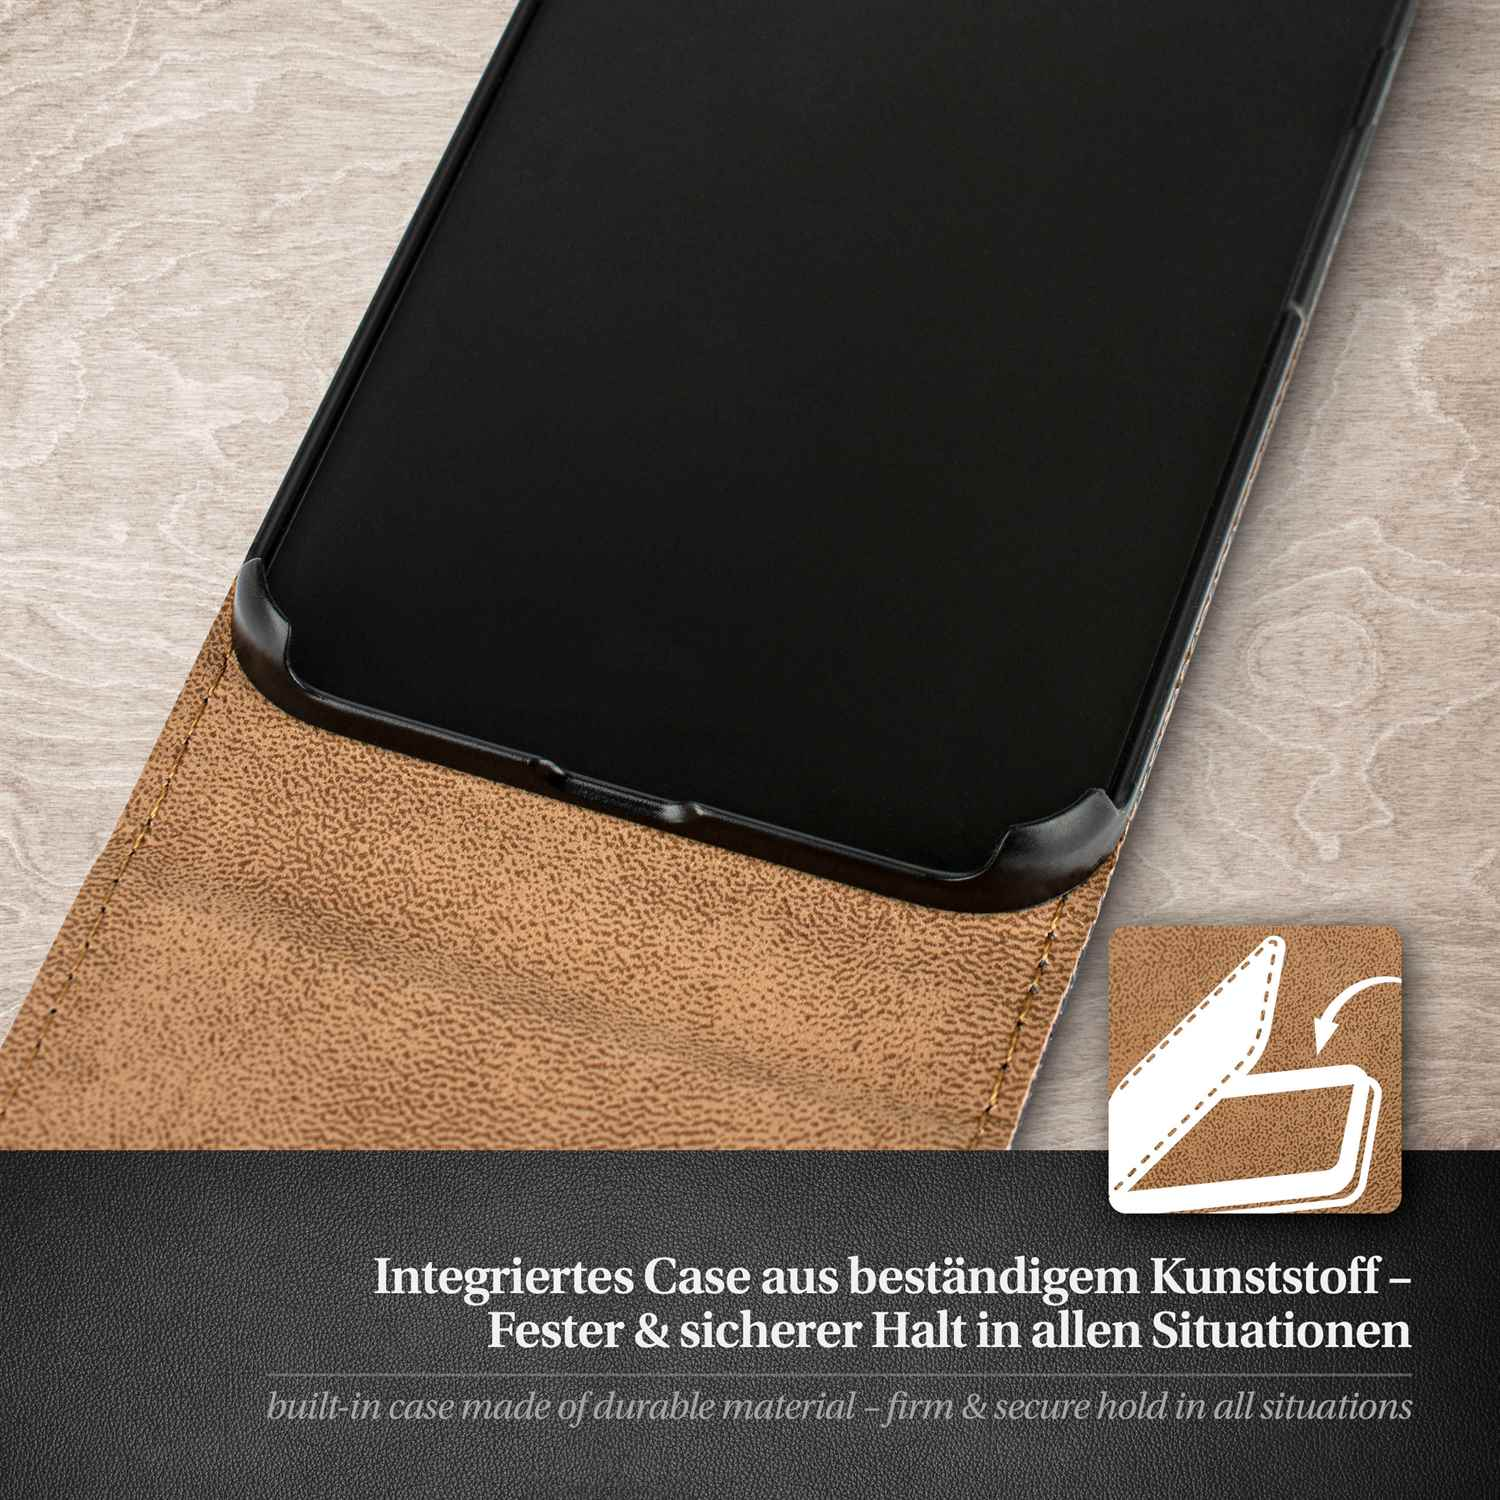 MOEX Flip Berry-Fuchsia Huawei, Honor Cover, Flip 6, Case